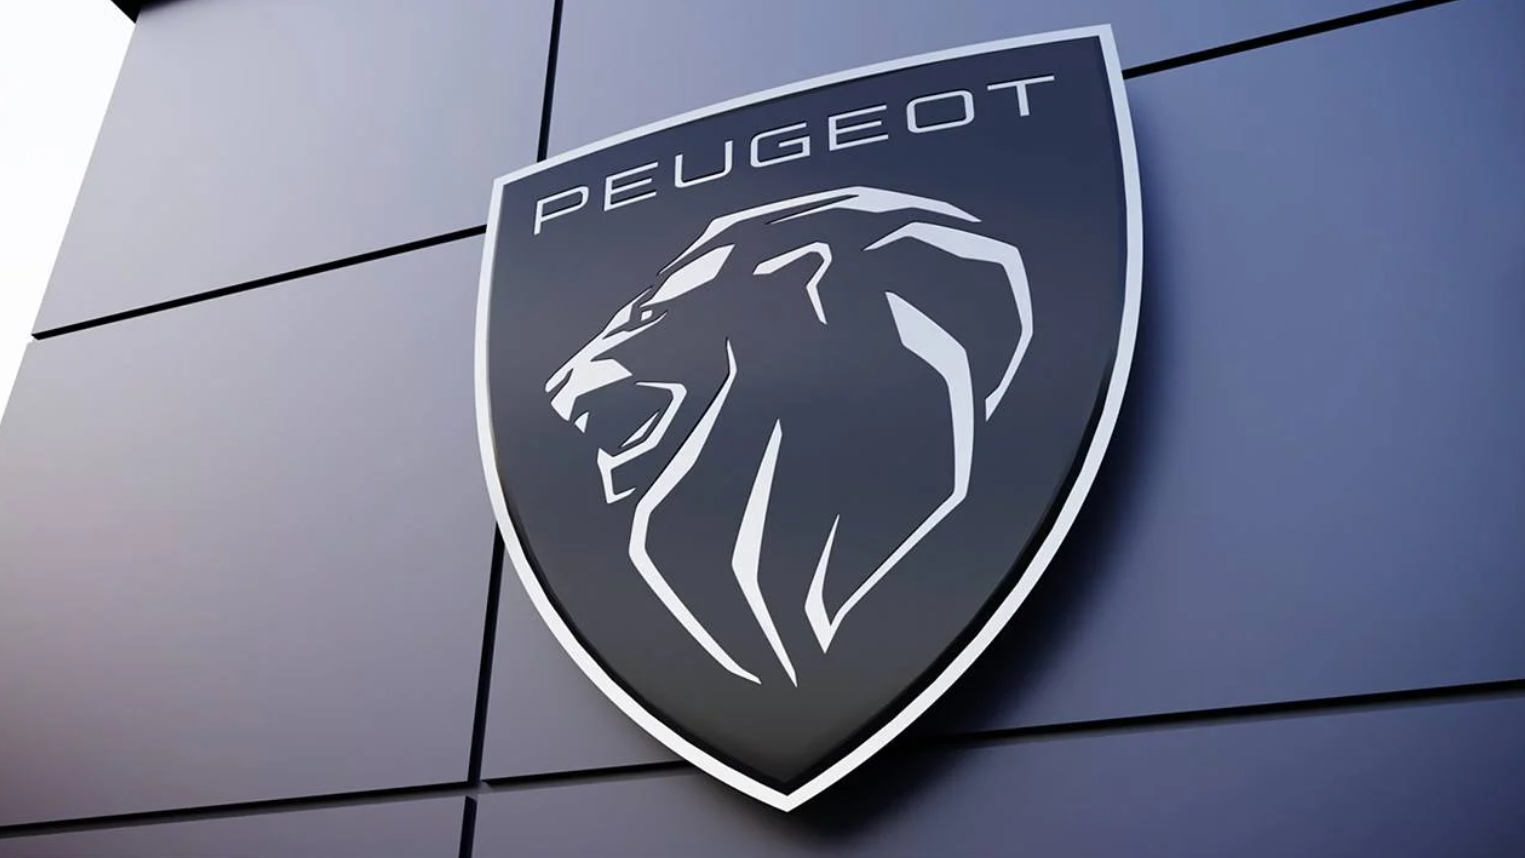 Peugeot nuevo logo